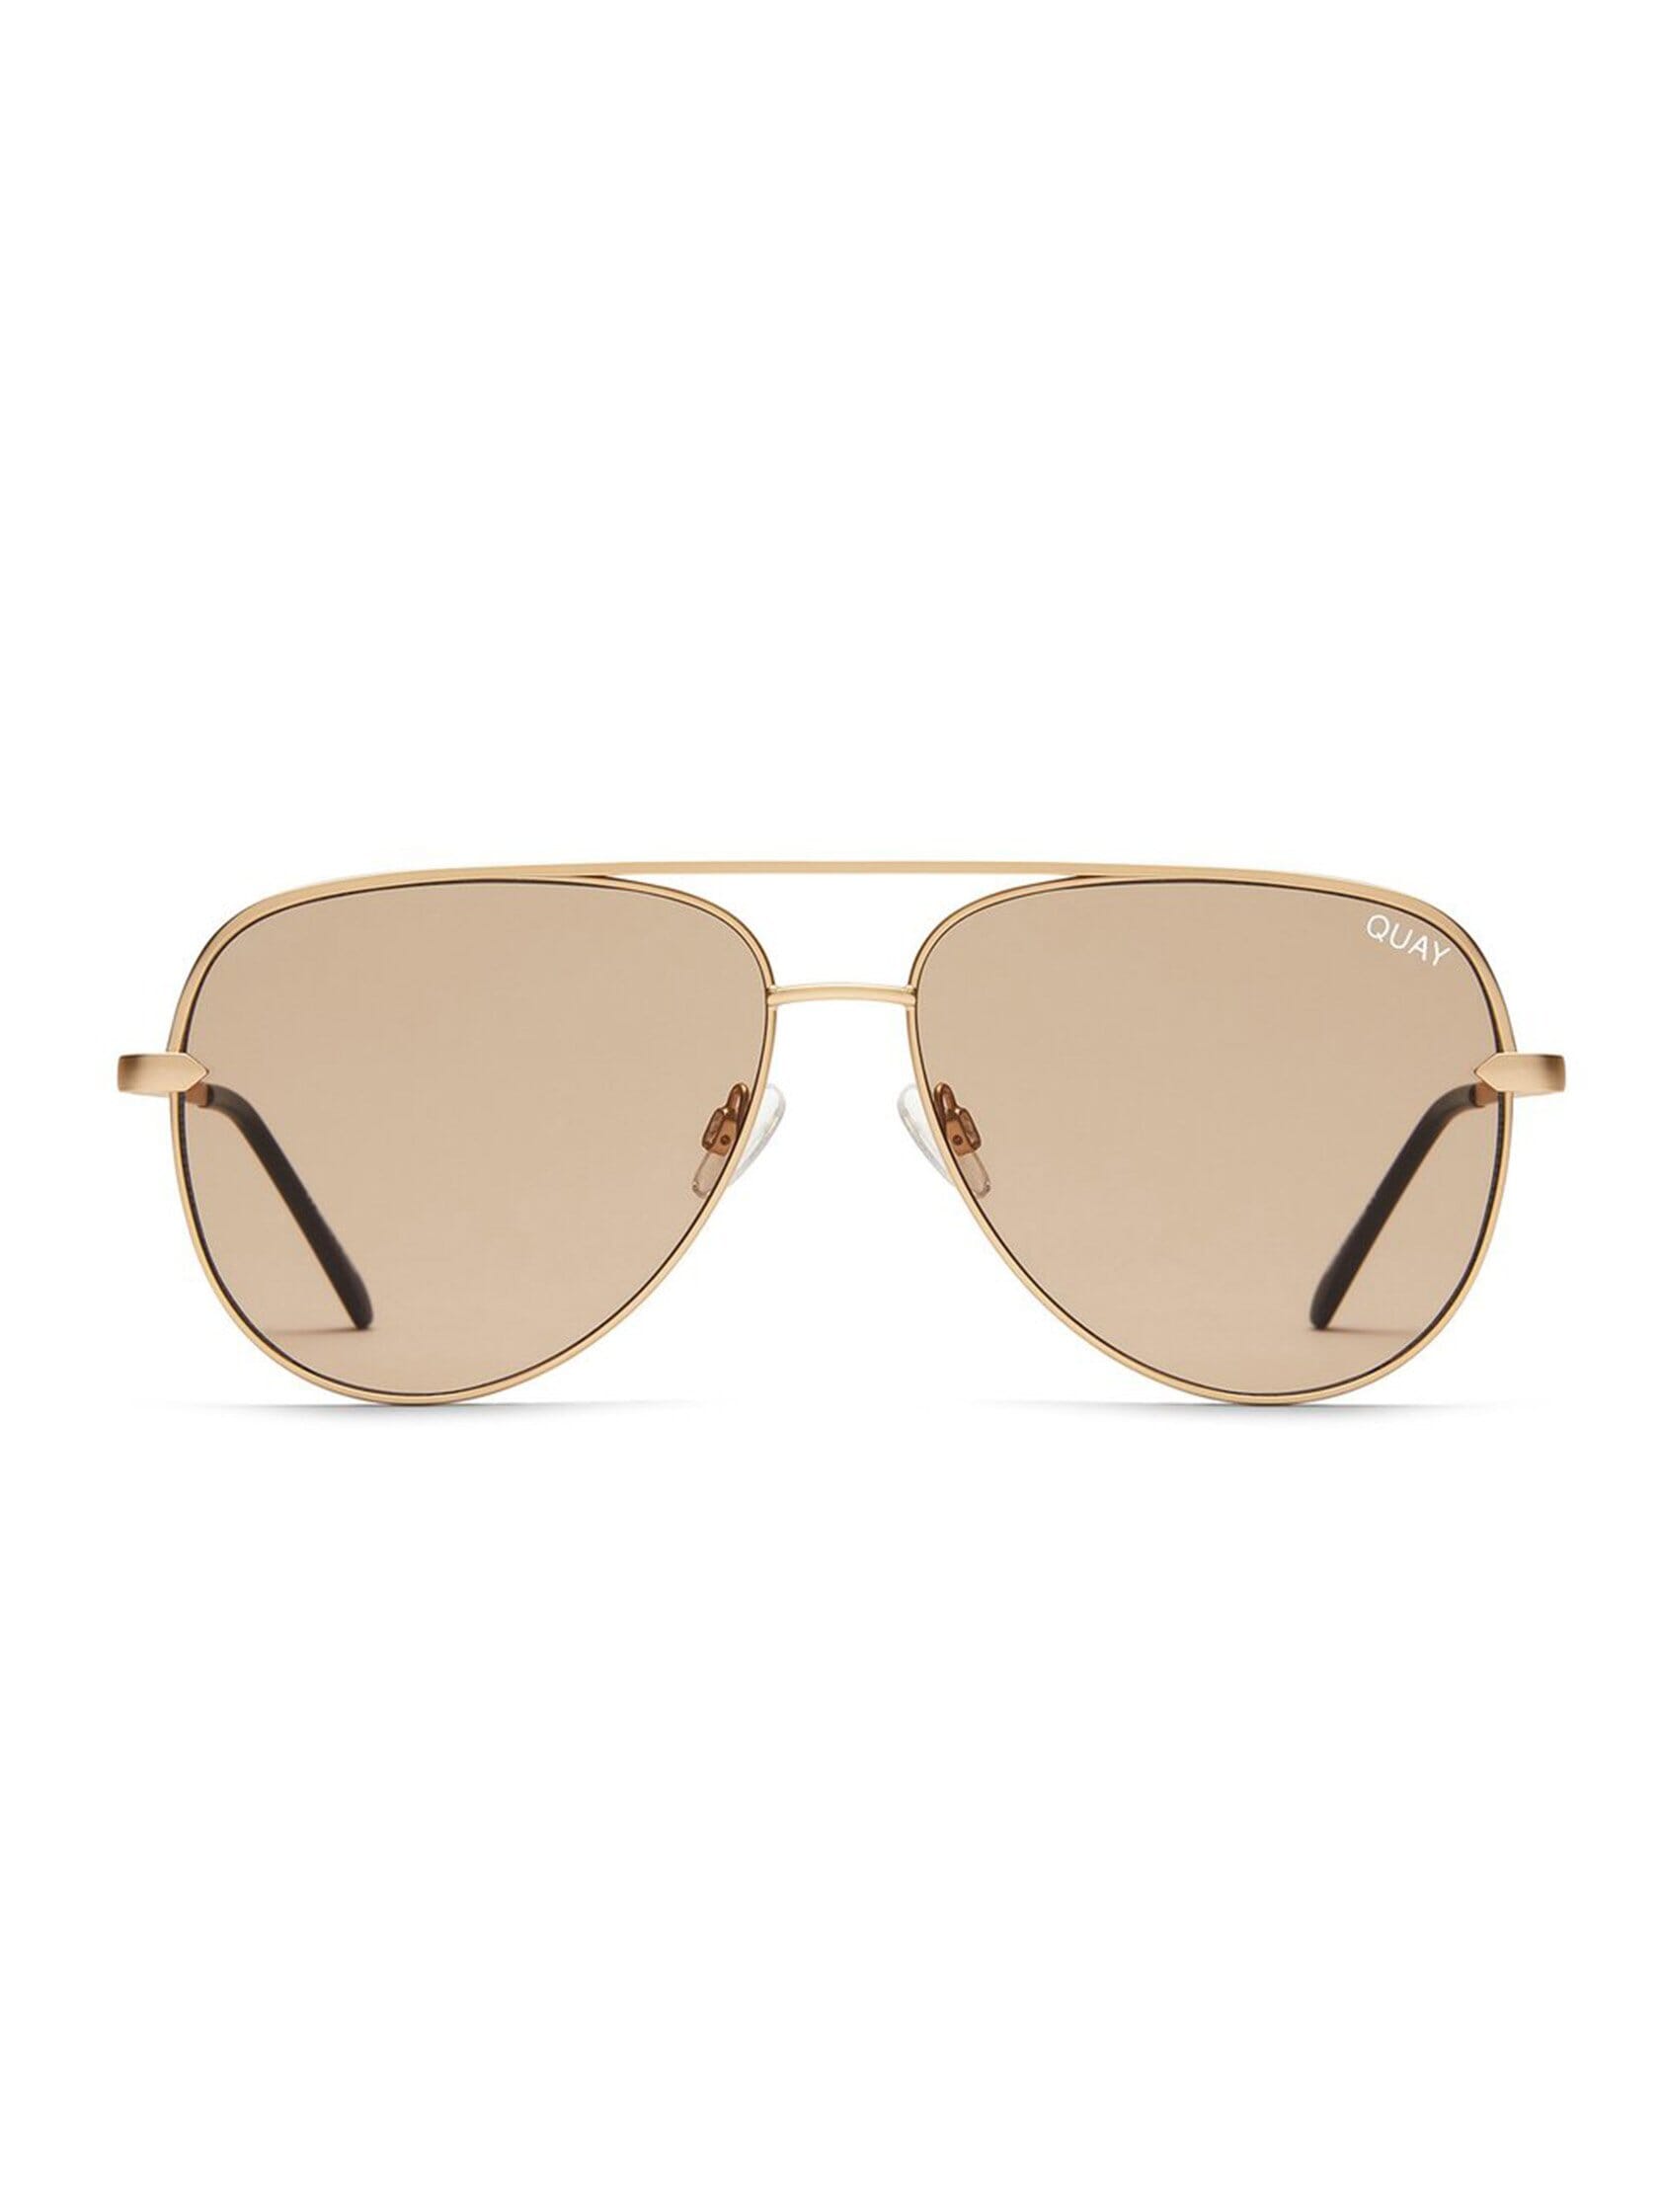 Quay Australia Sahara 60mm Aviator Sunglasses In Gold Taupe Fashionpass